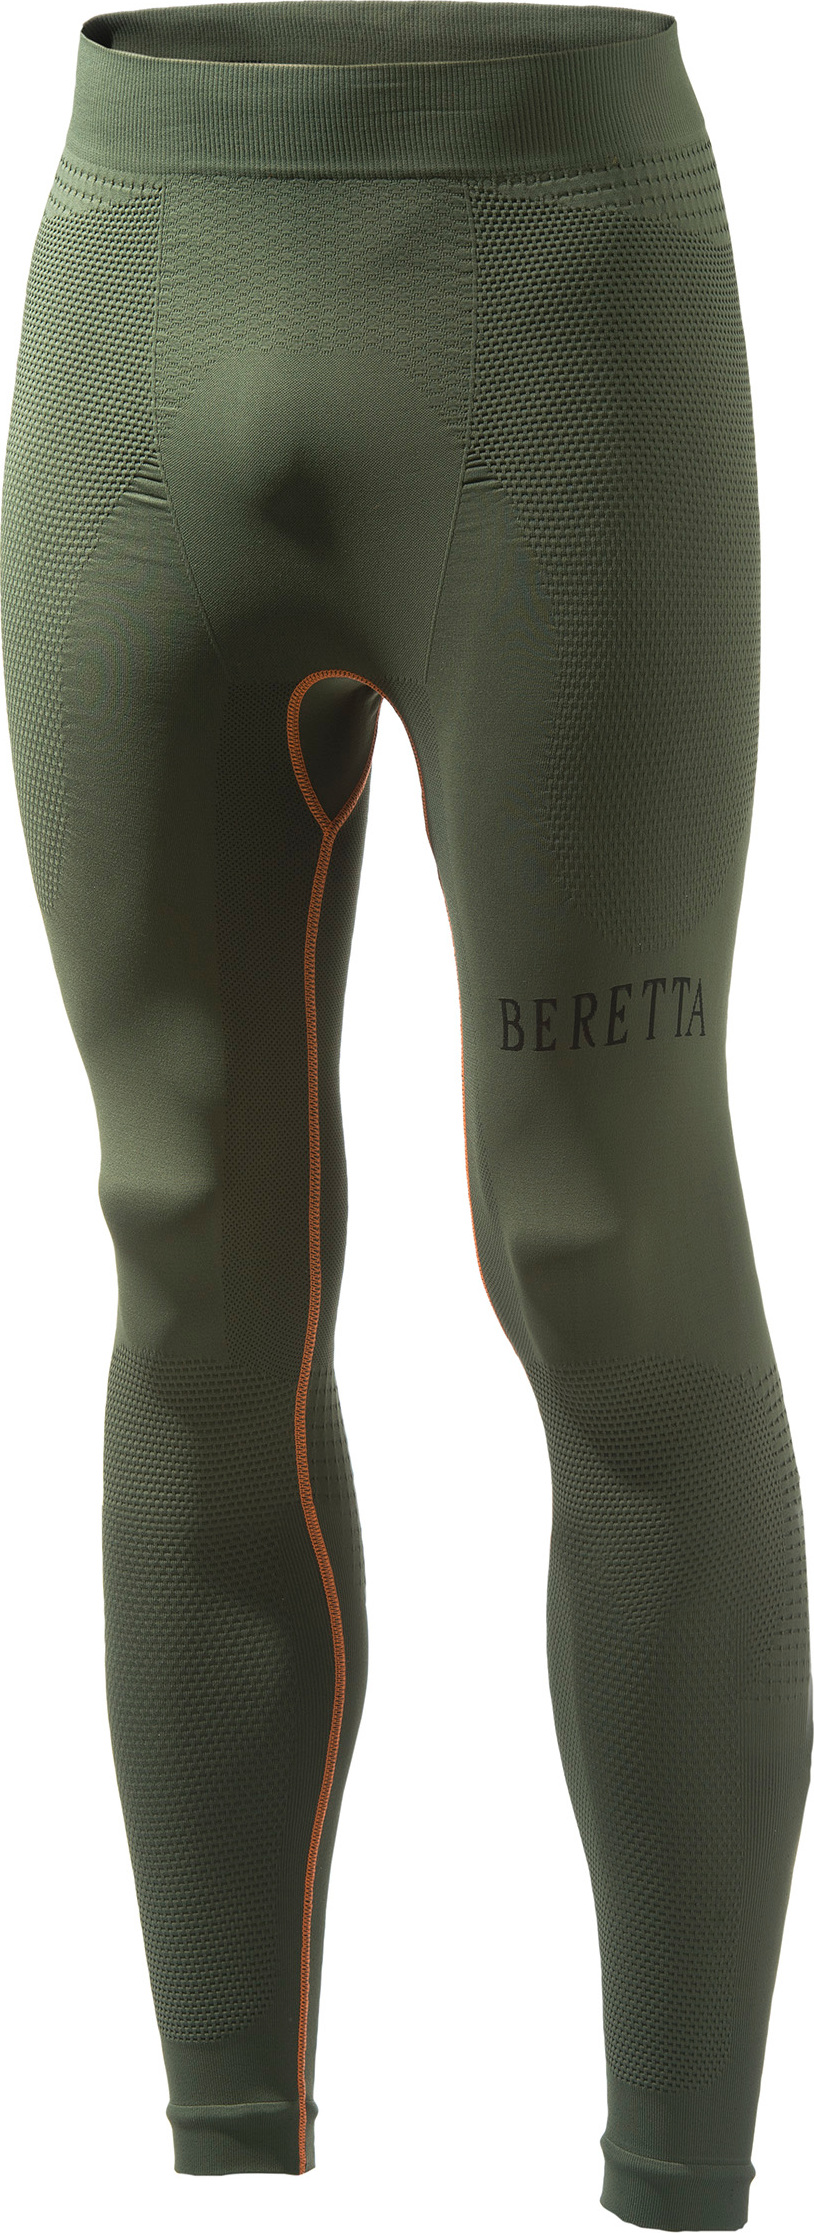 Beretta Men’s Body Mapping 3D Pants Green